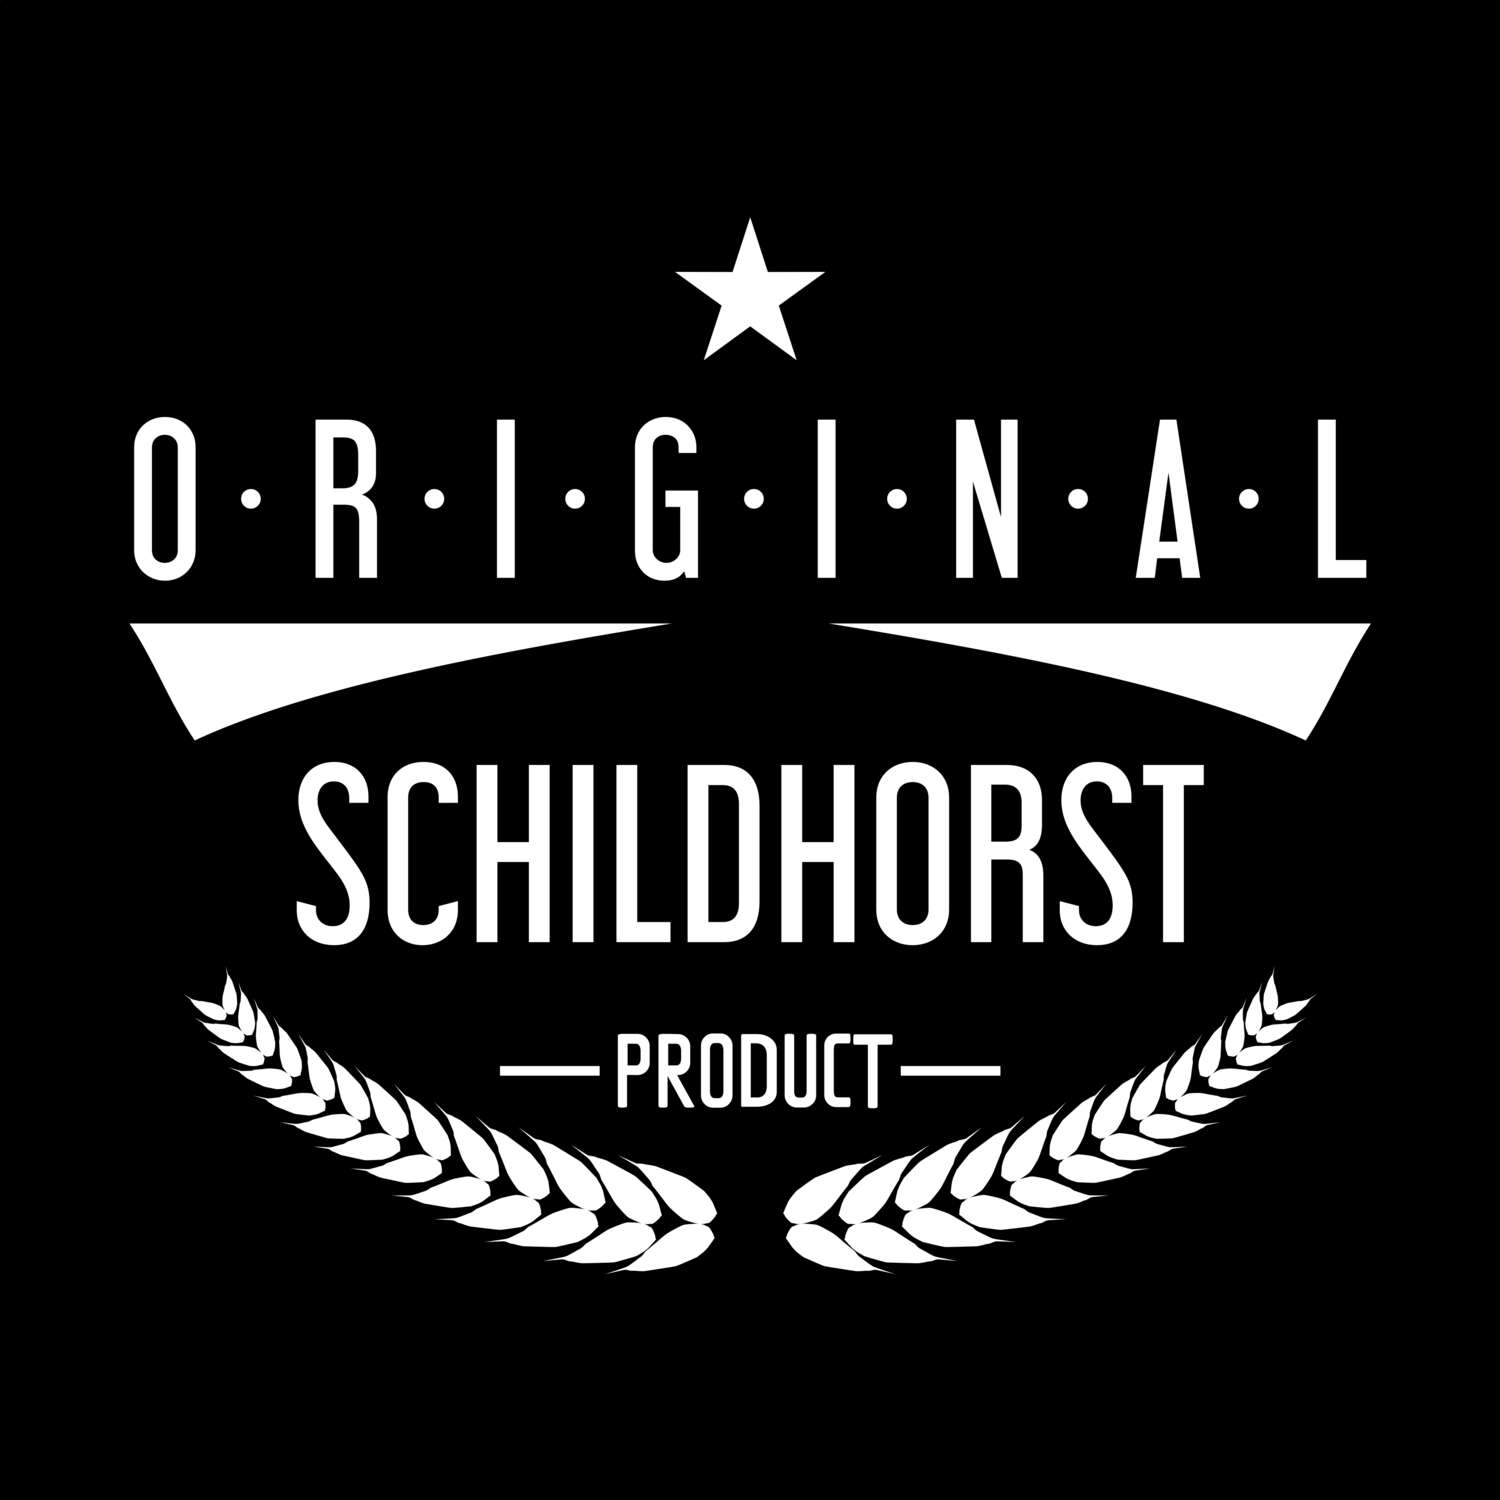 Schildhorst T-Shirt »Original Product«